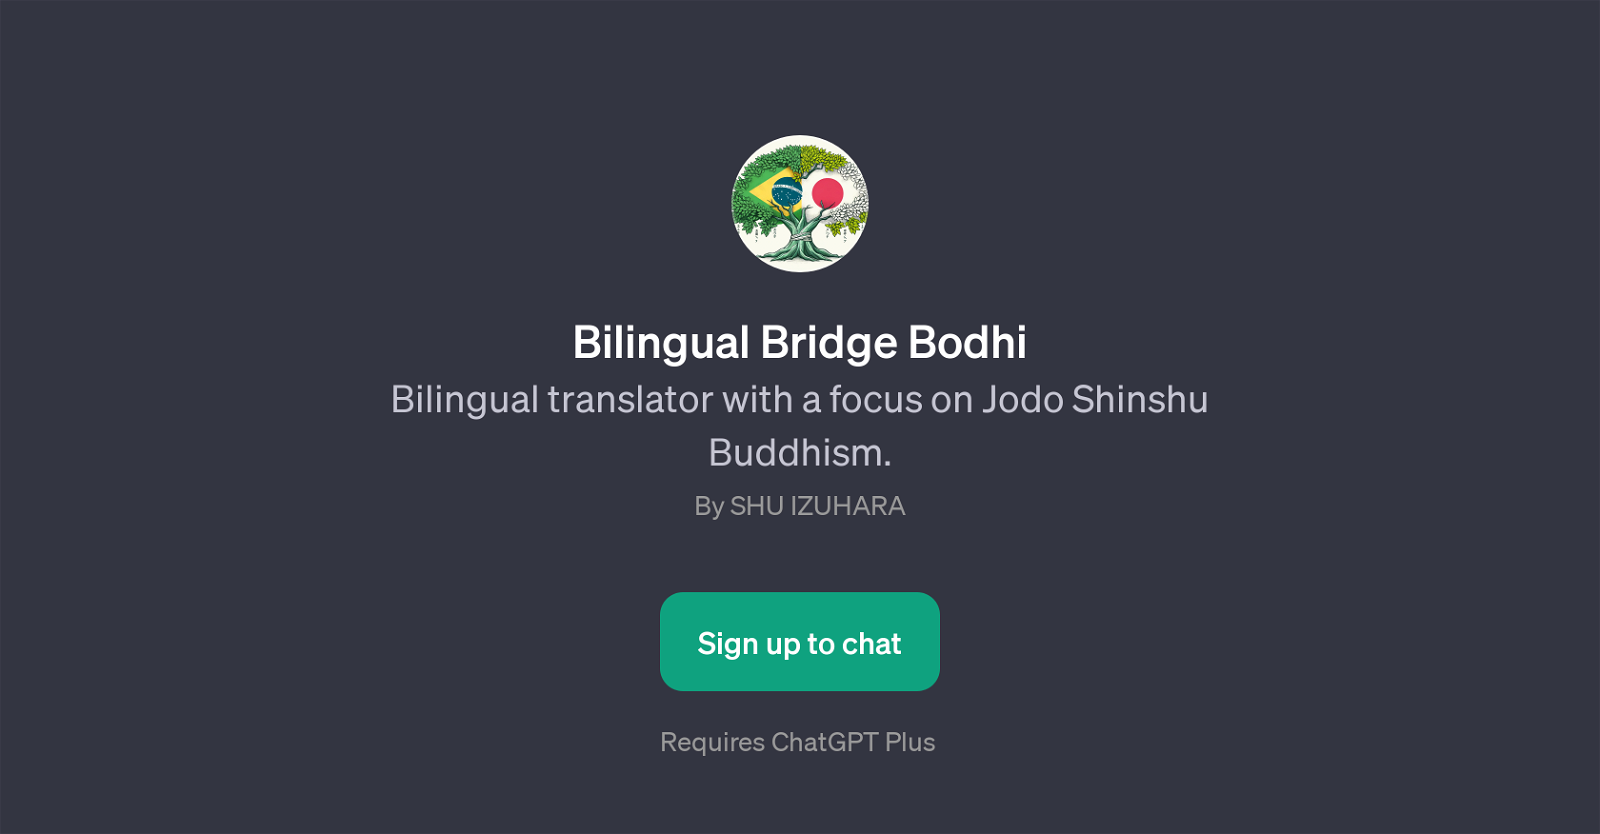 Bilingual Bridge Bodhi website